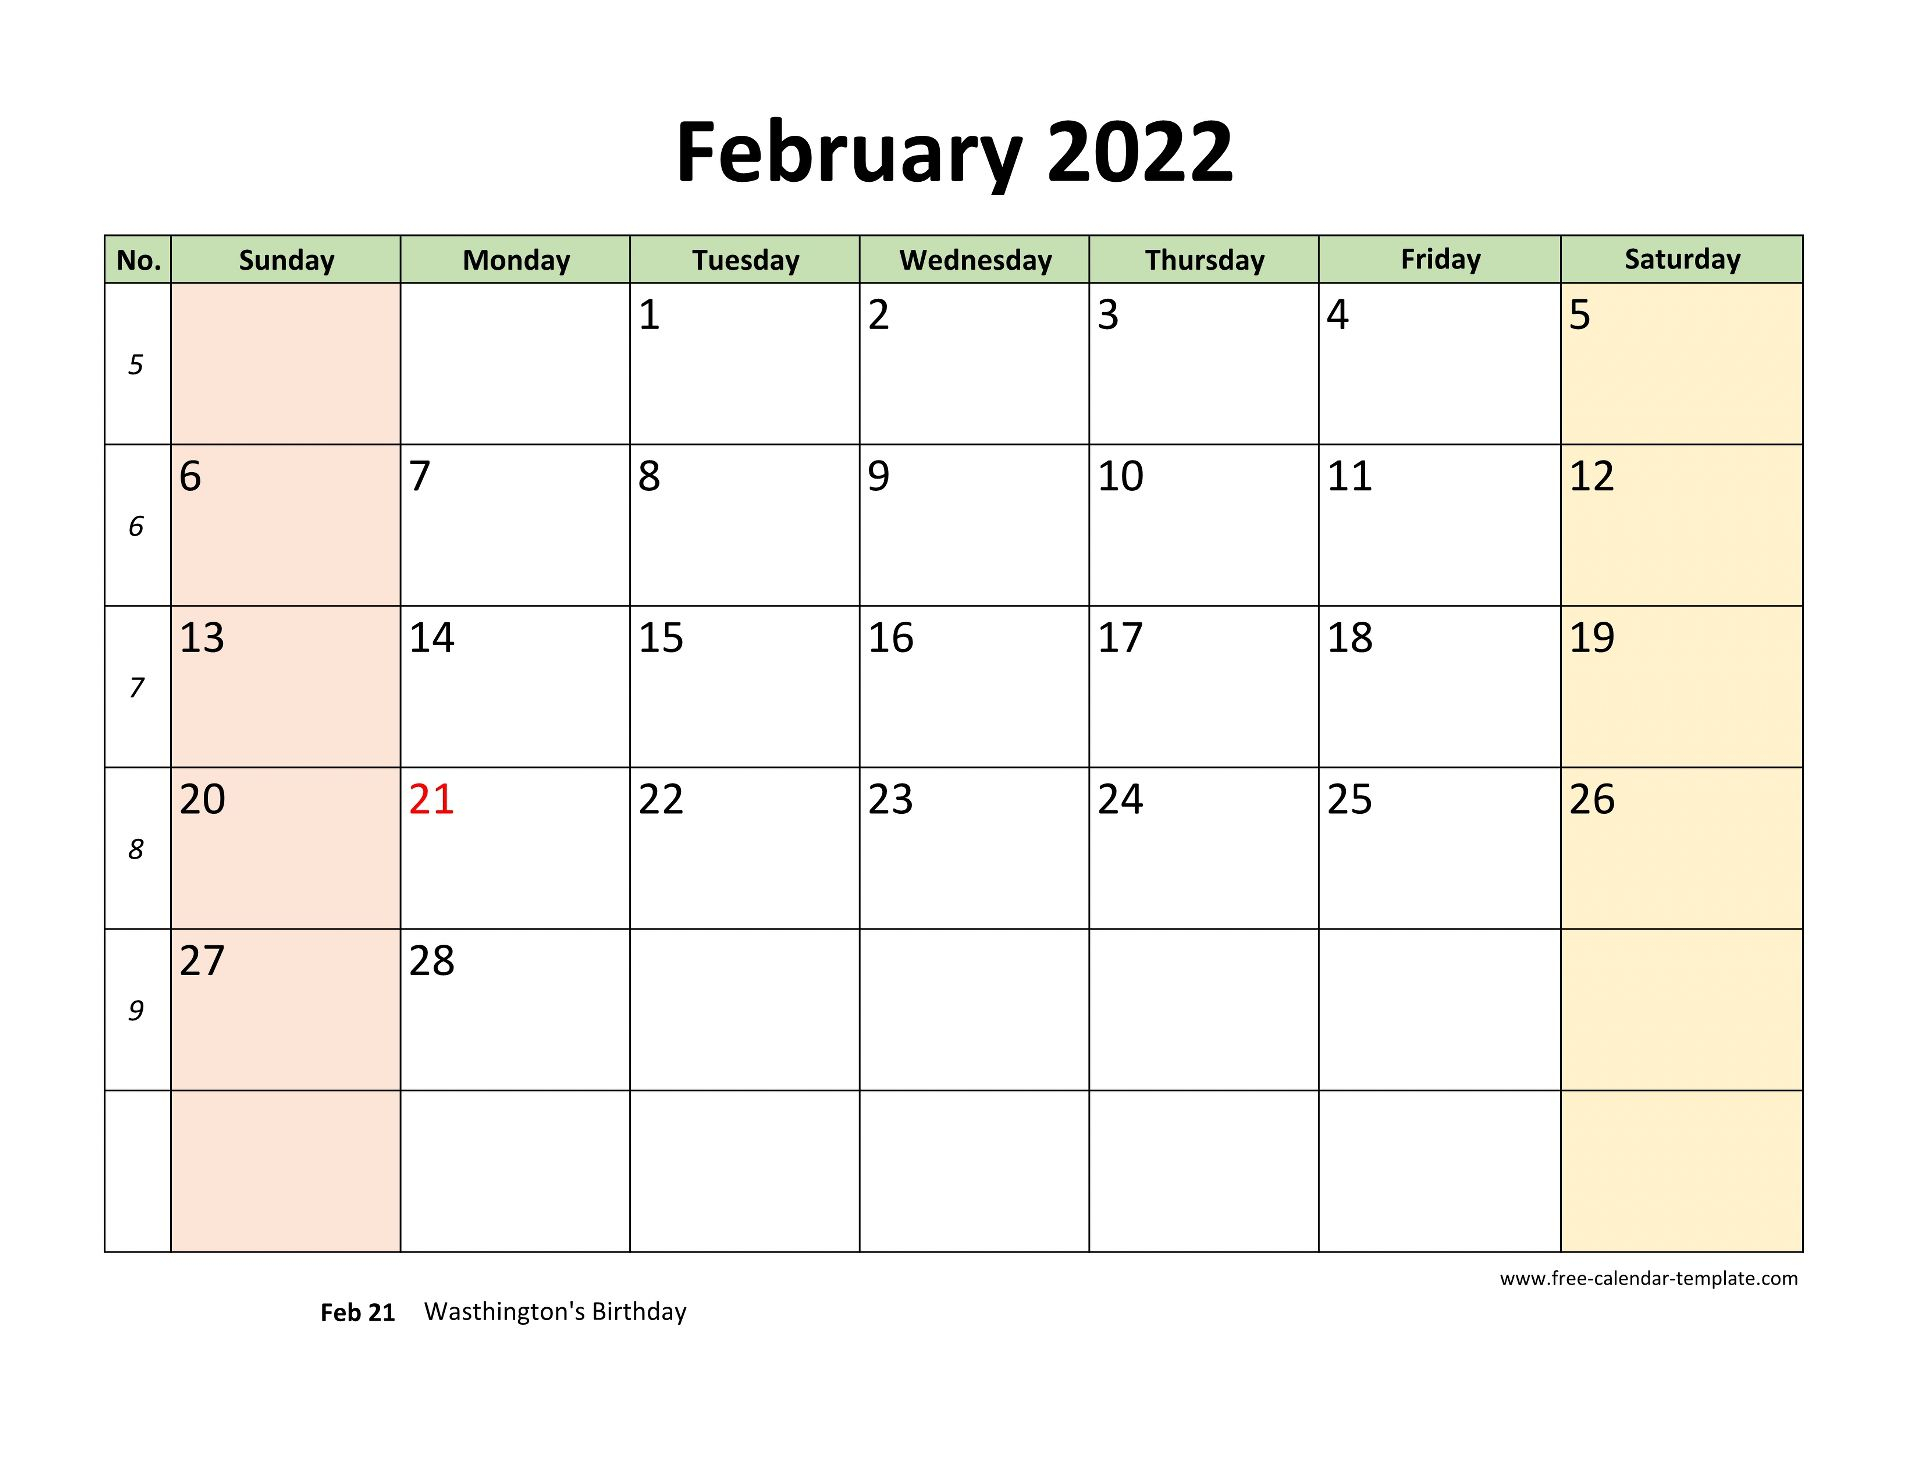 february 2022 free calendar tempplate free calendar